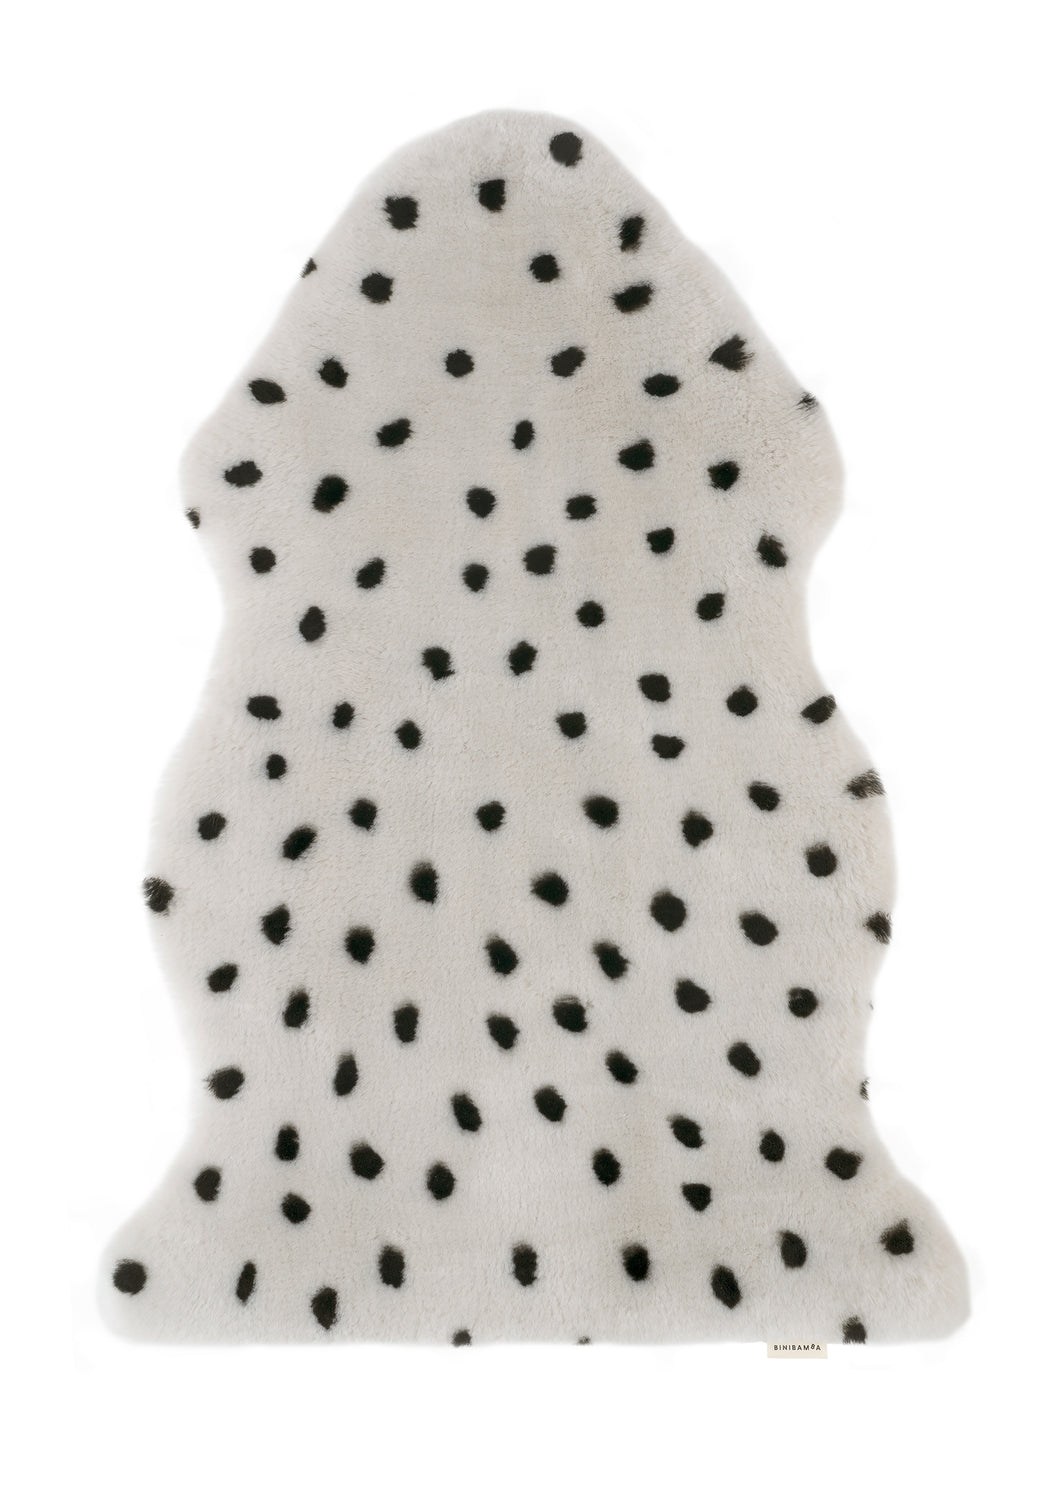 Dalmatian dove grey toned dalmatian print sheepskin rug by Binibamba